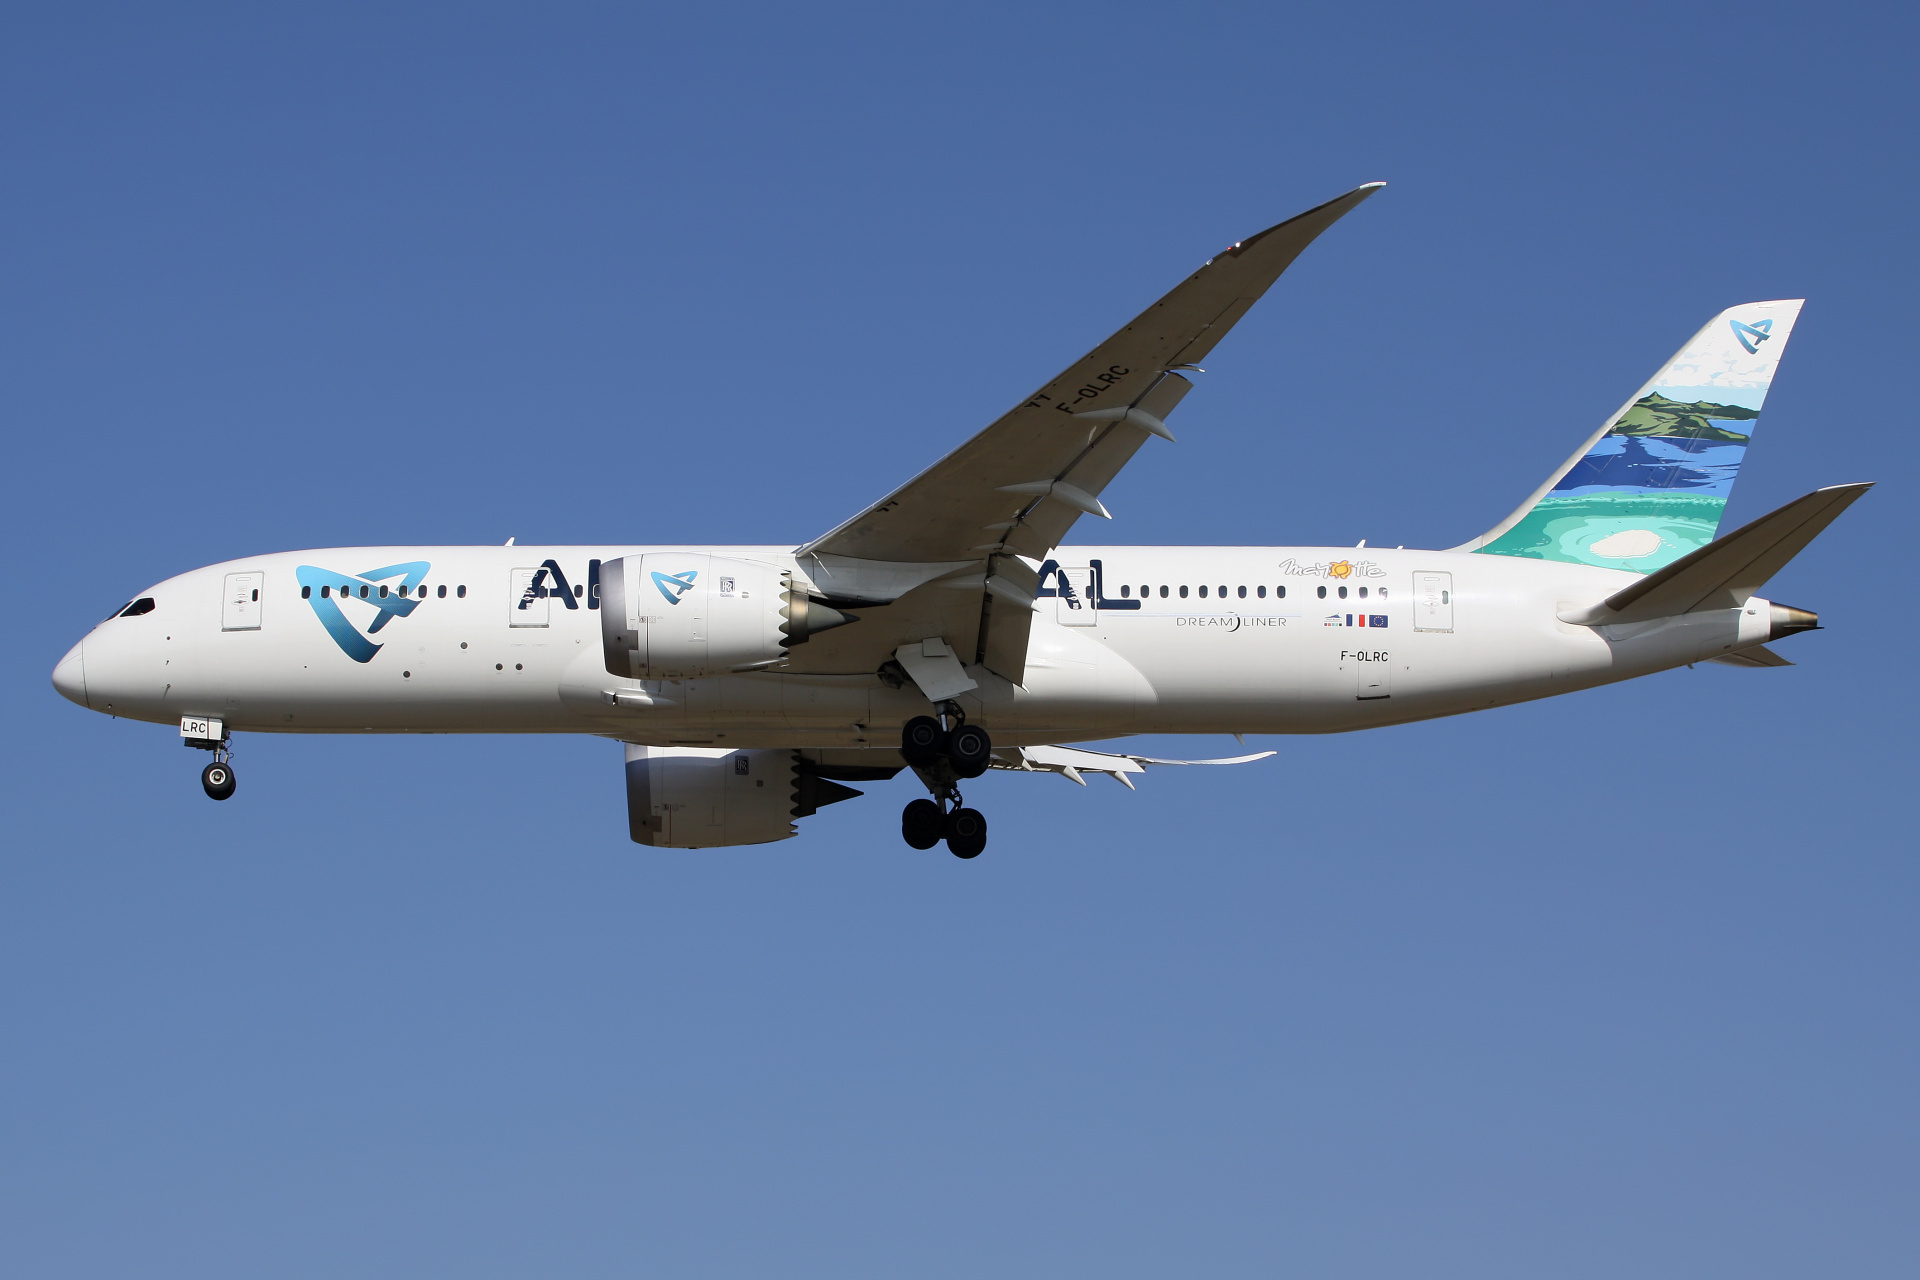 F-OLRC (Aircraft » EPWA Spotting » Boeing 787-8 Dreamliner » Air Austral)